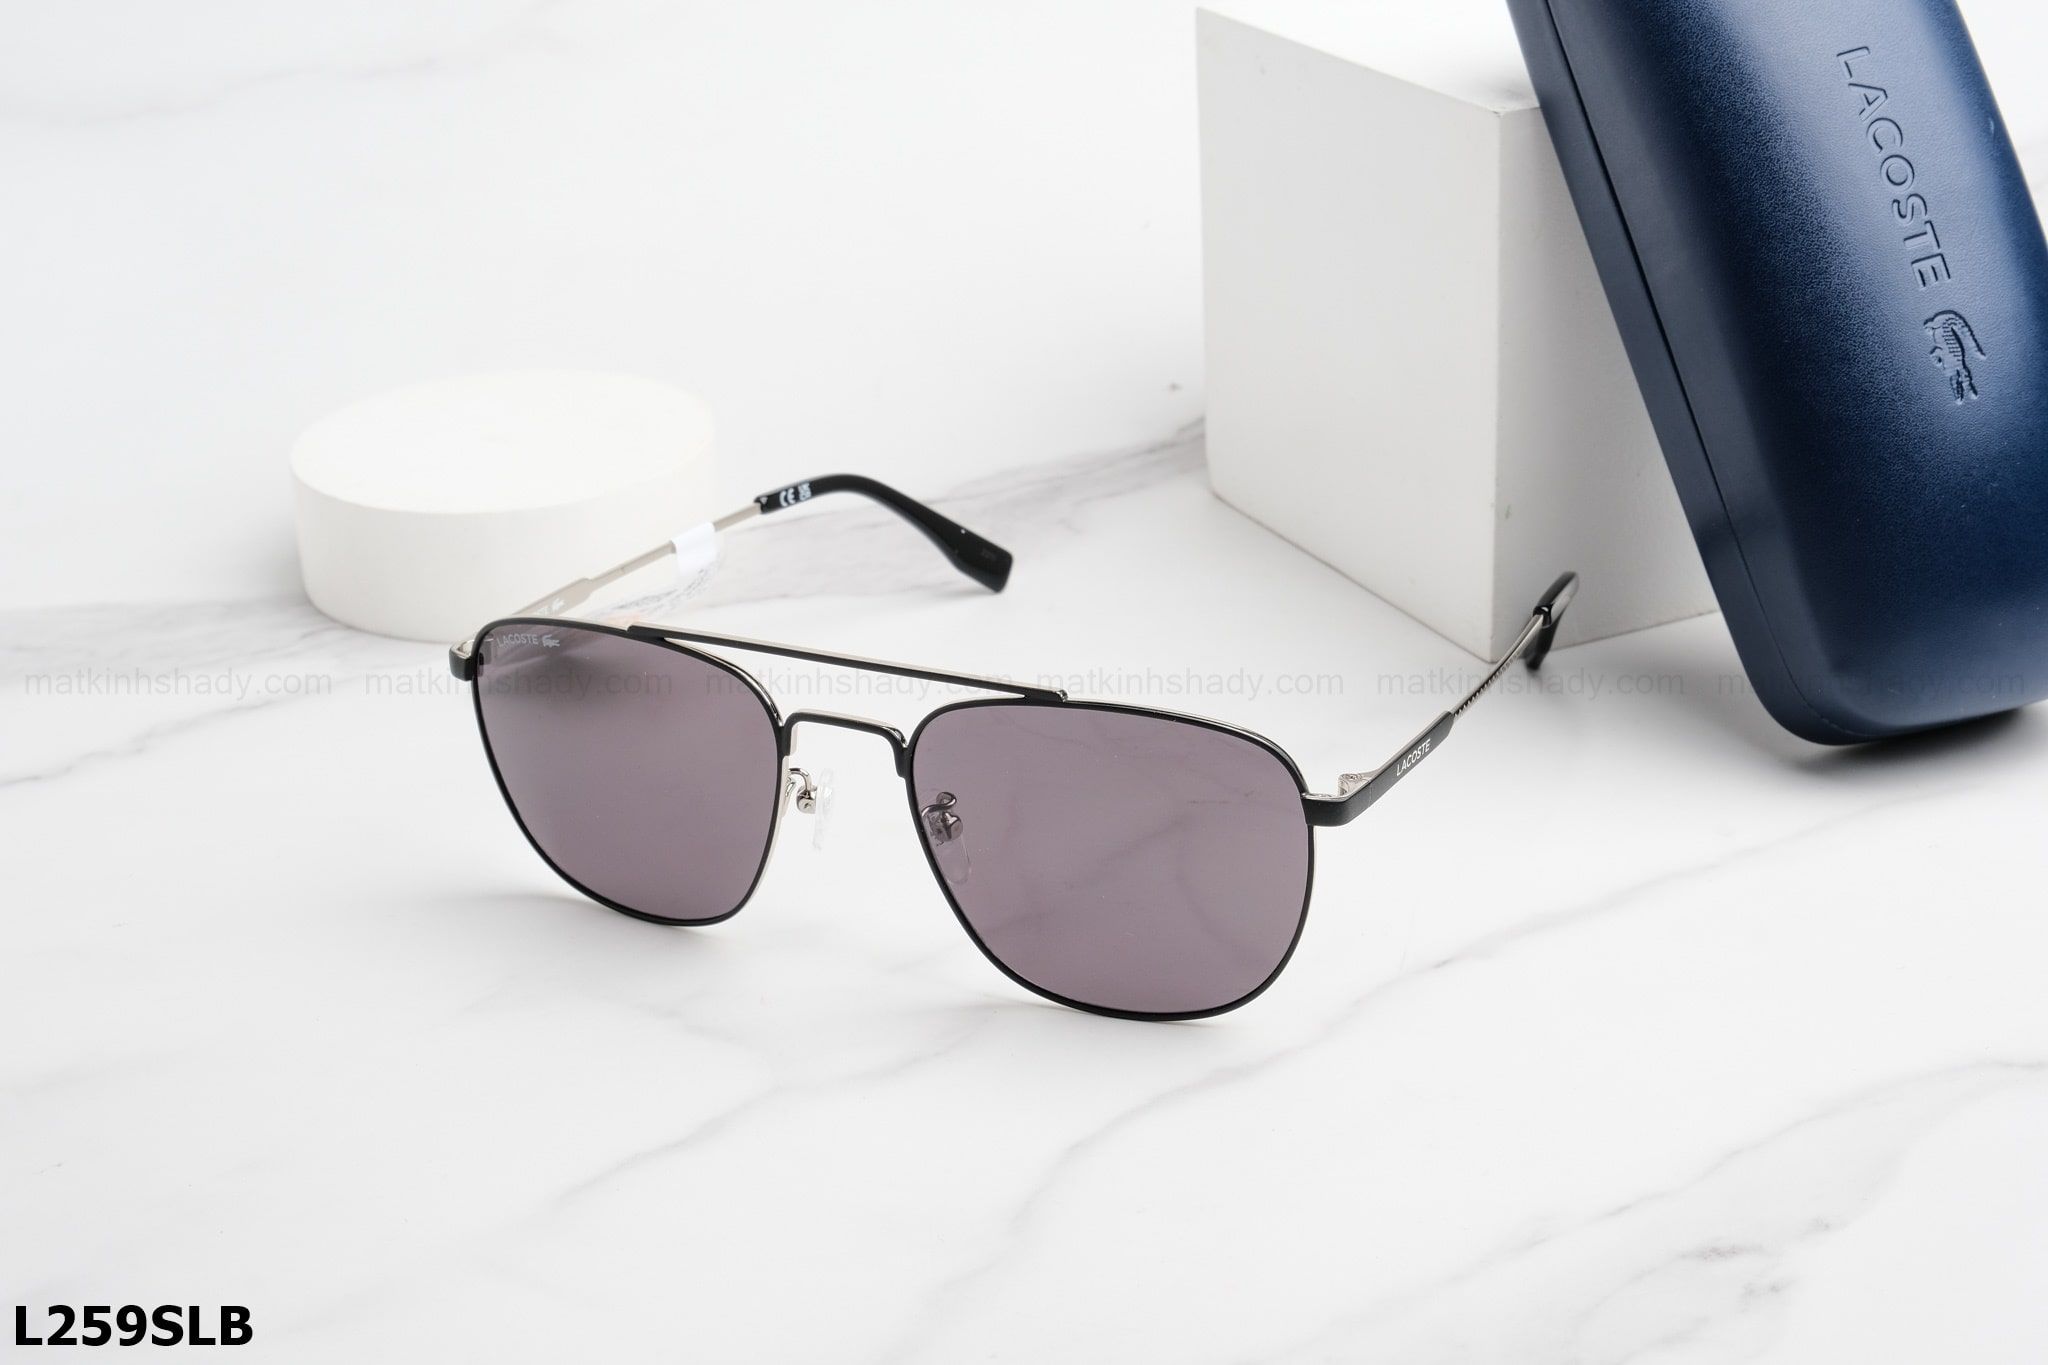  Lacoste Eyewear - Sunglasses - L259SLB 